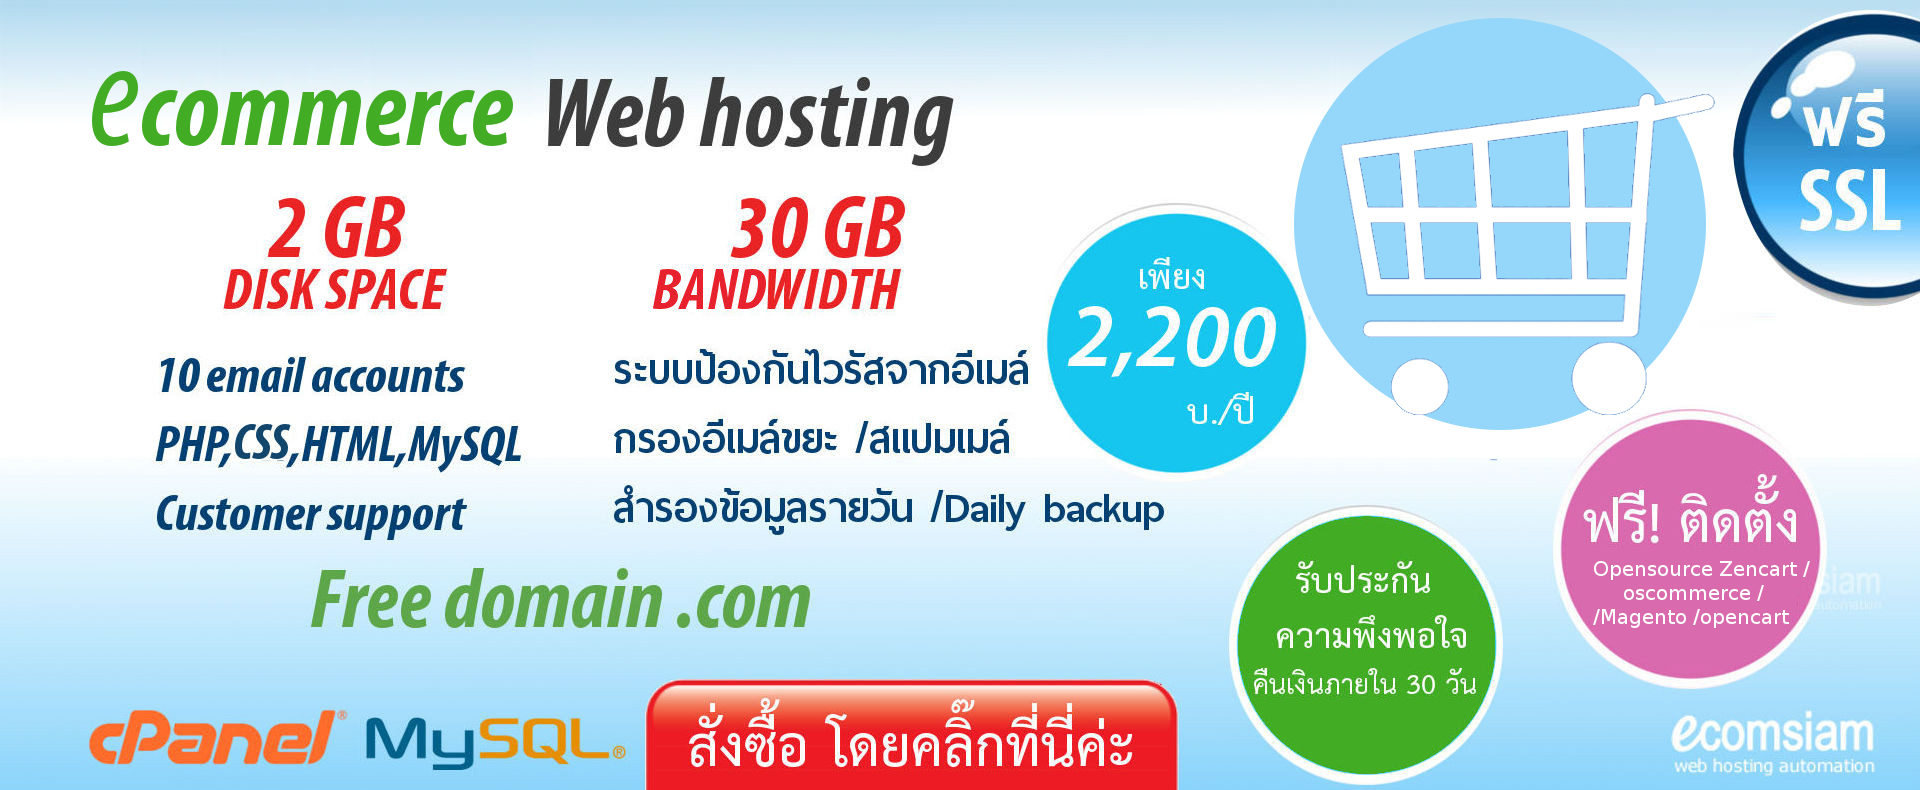 web hosting thailand - ecommerce web hosting ไทย ฟรีโดเมน ฟรี SSL เริ่มต้นเพียง 2,200 บาท/ปี ฟรีติดตั้ง opensource เช่น wordpress,zencart,oscommerce,magento,opencart...